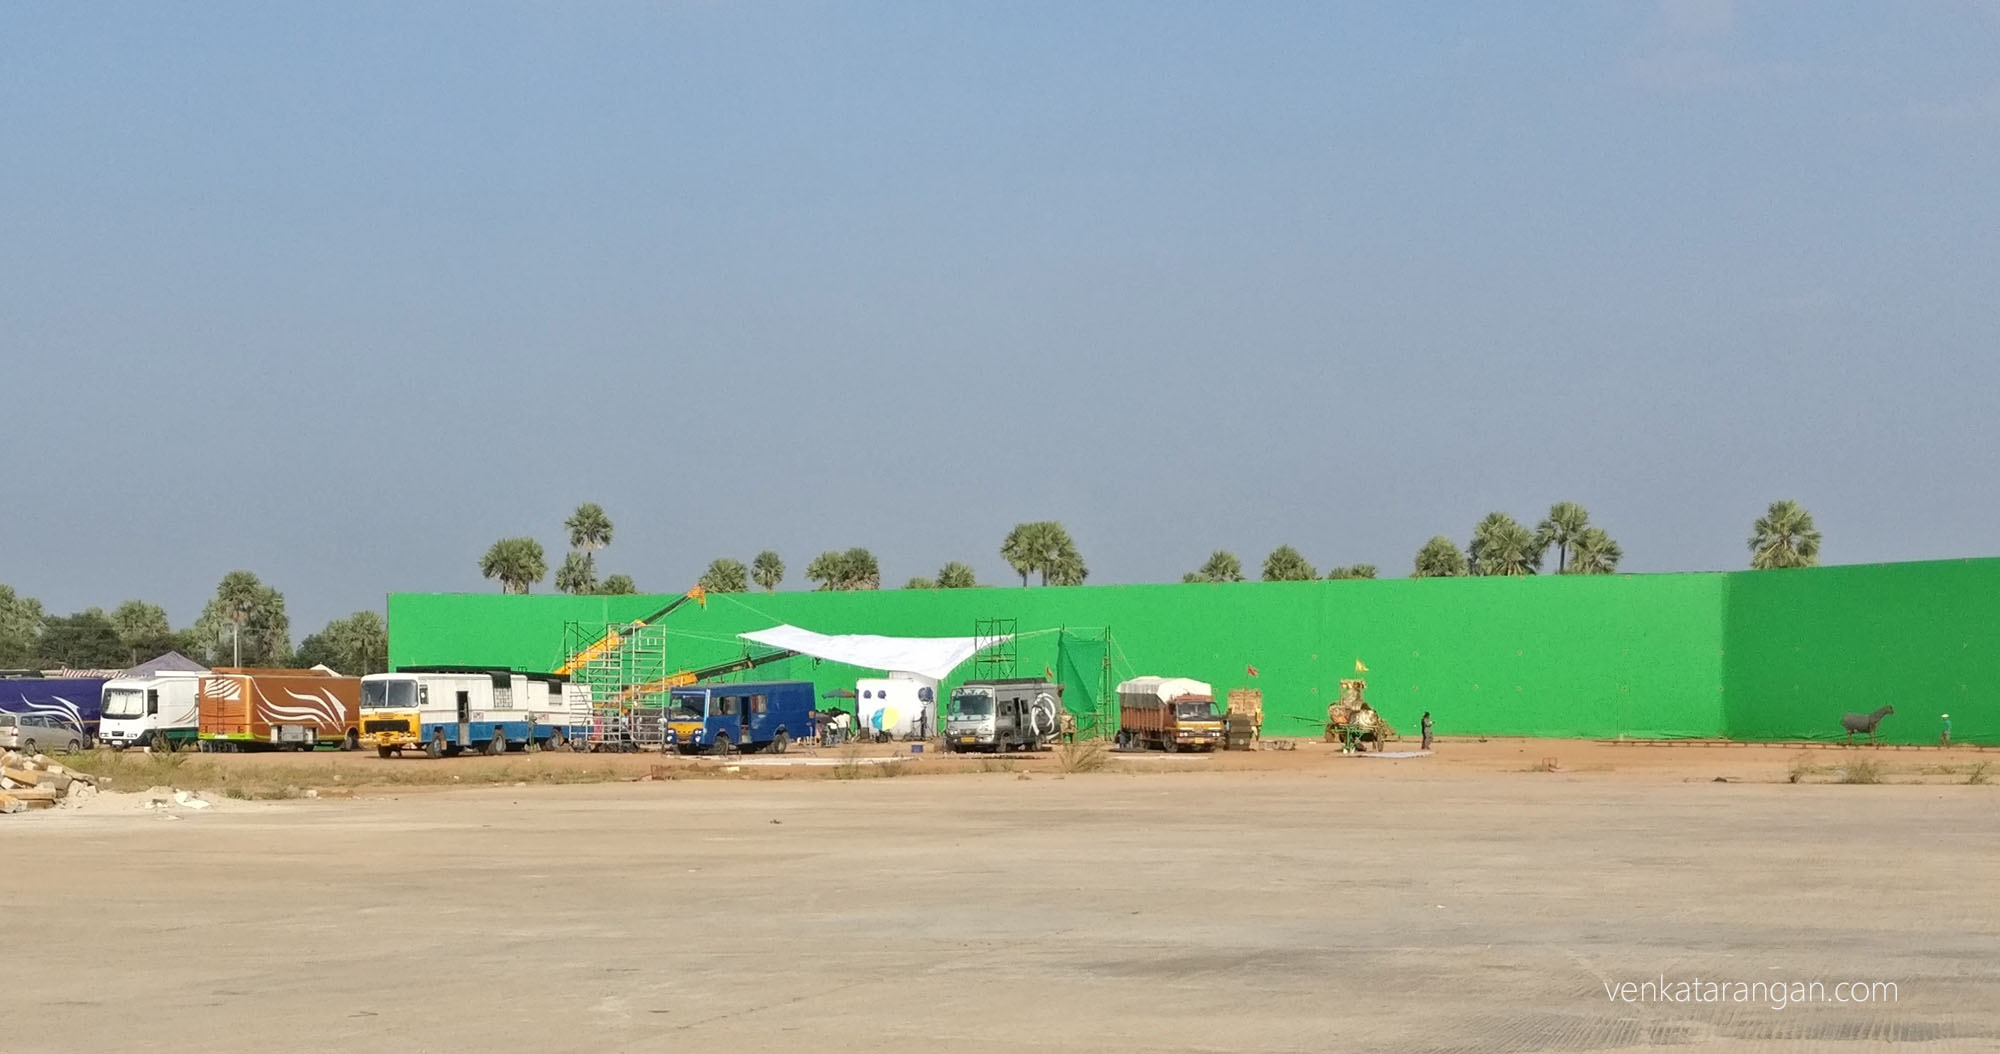 Ramoji Film city - Live film shooting with a green screen